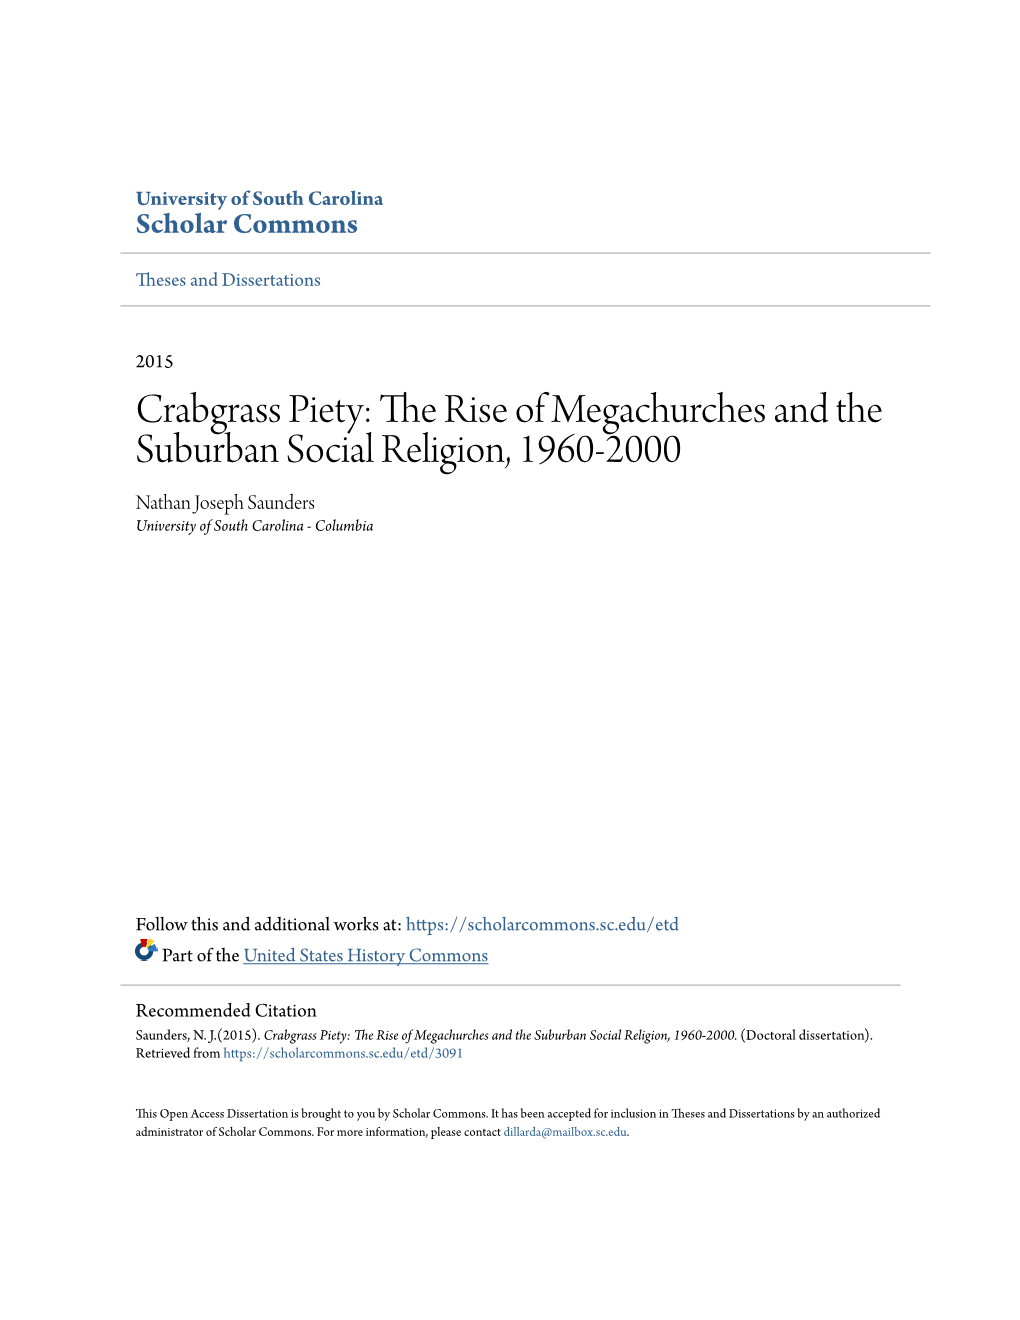 The Rise of Megachurches and the Suburban Social Religion, 1960-2000 Nathan Joseph Saunders University of South Carolina - Columbia